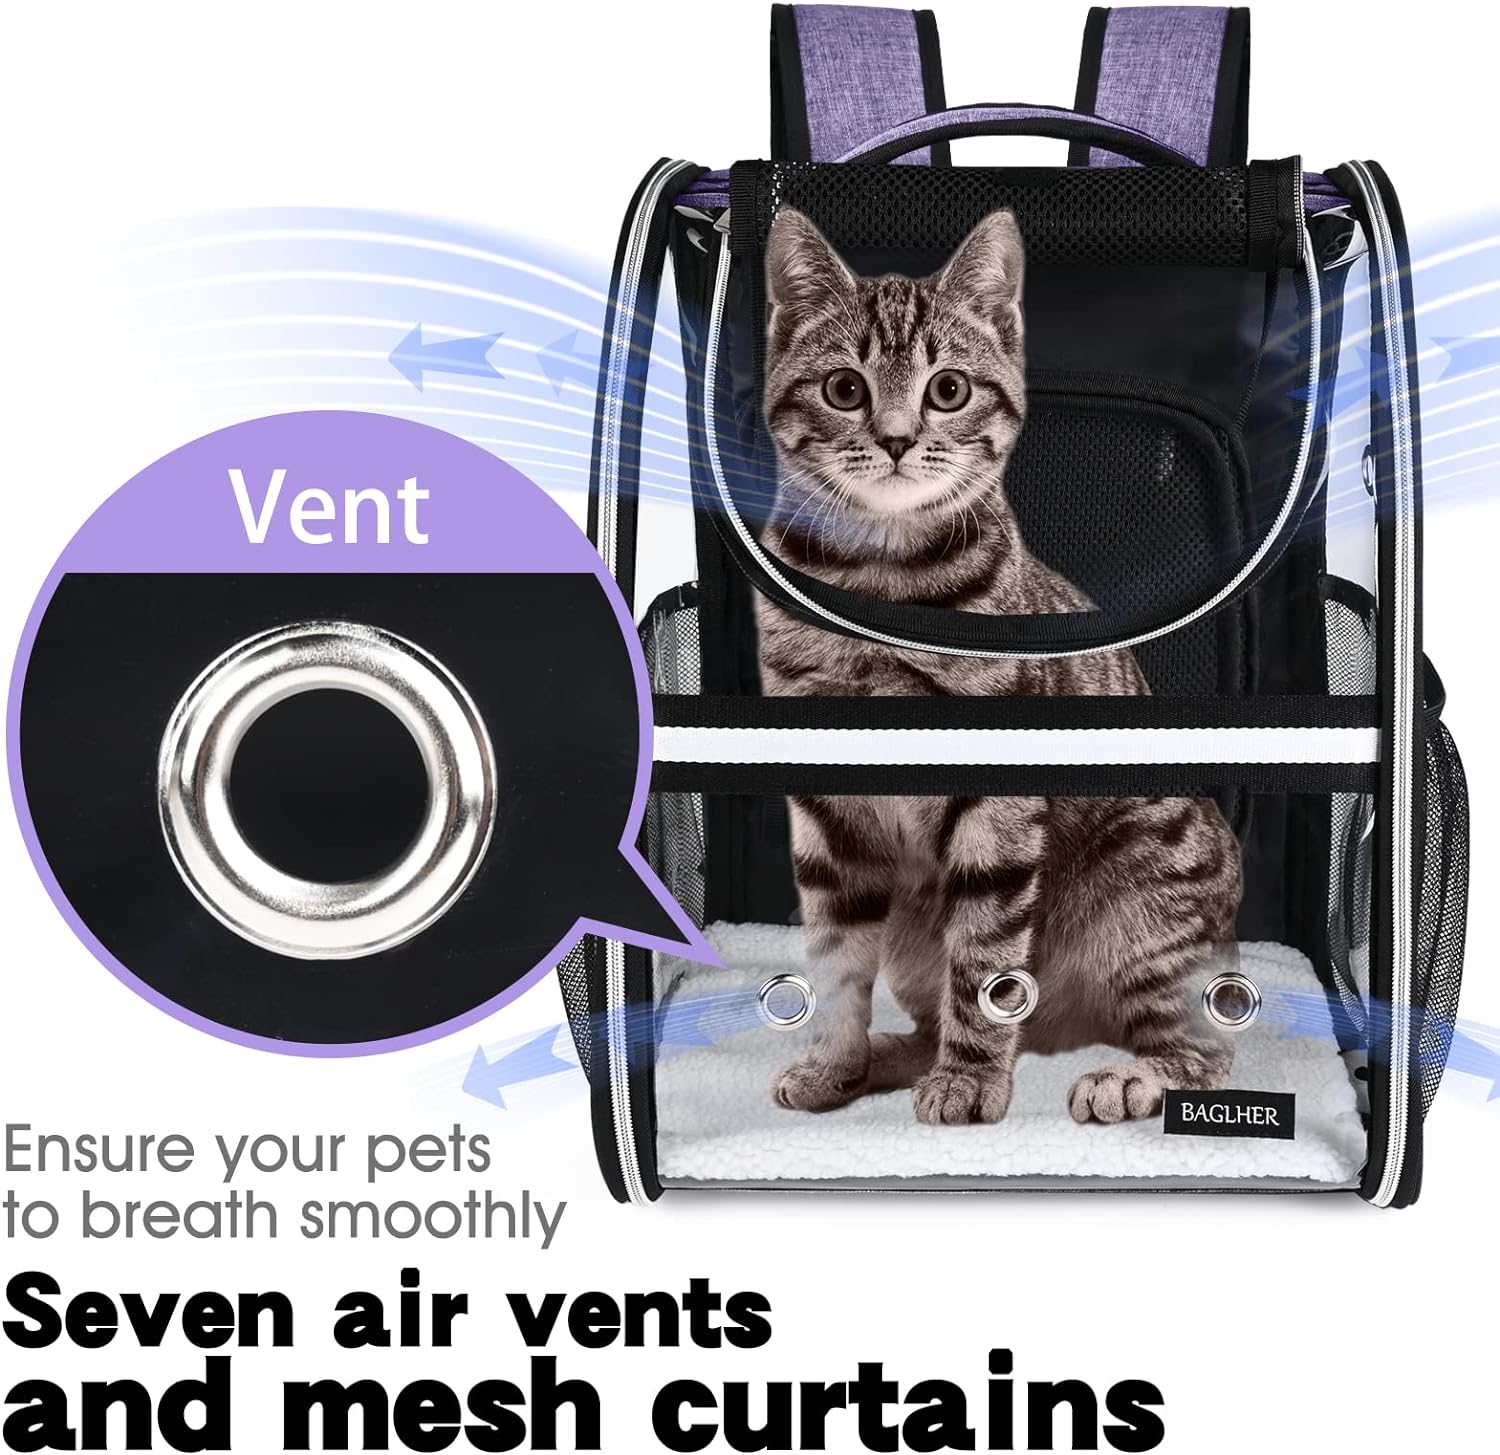 Mochila expandible para transportar mascotas, mochila de burbujas para gatos